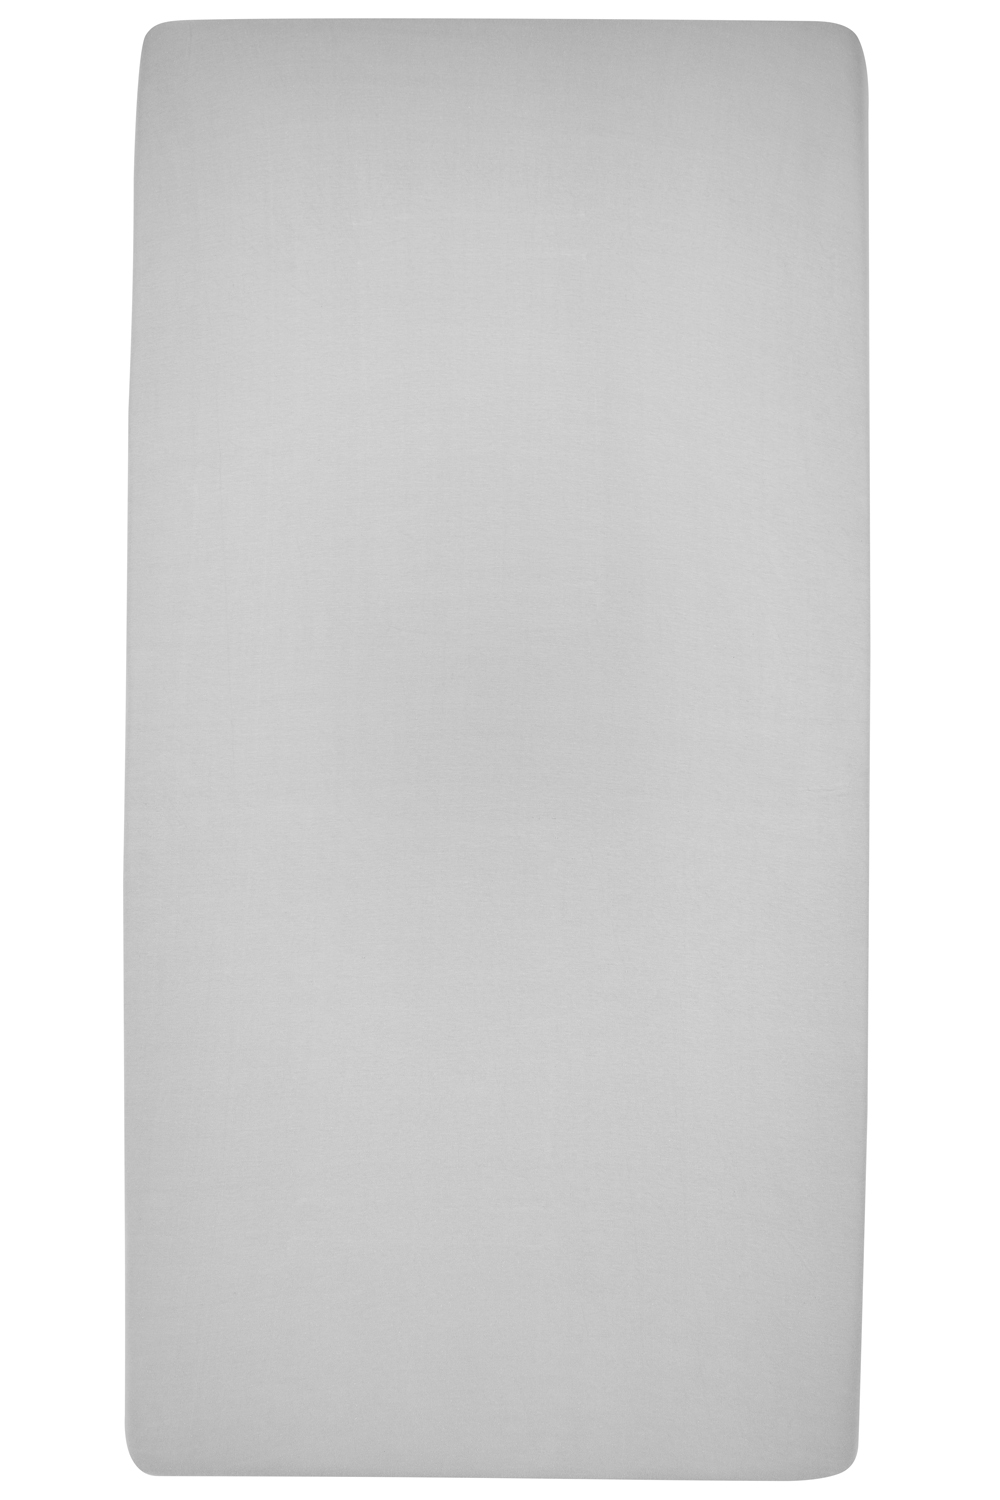 Jersey Hoeslaken - Lichtgrijs - 40x80/90cm